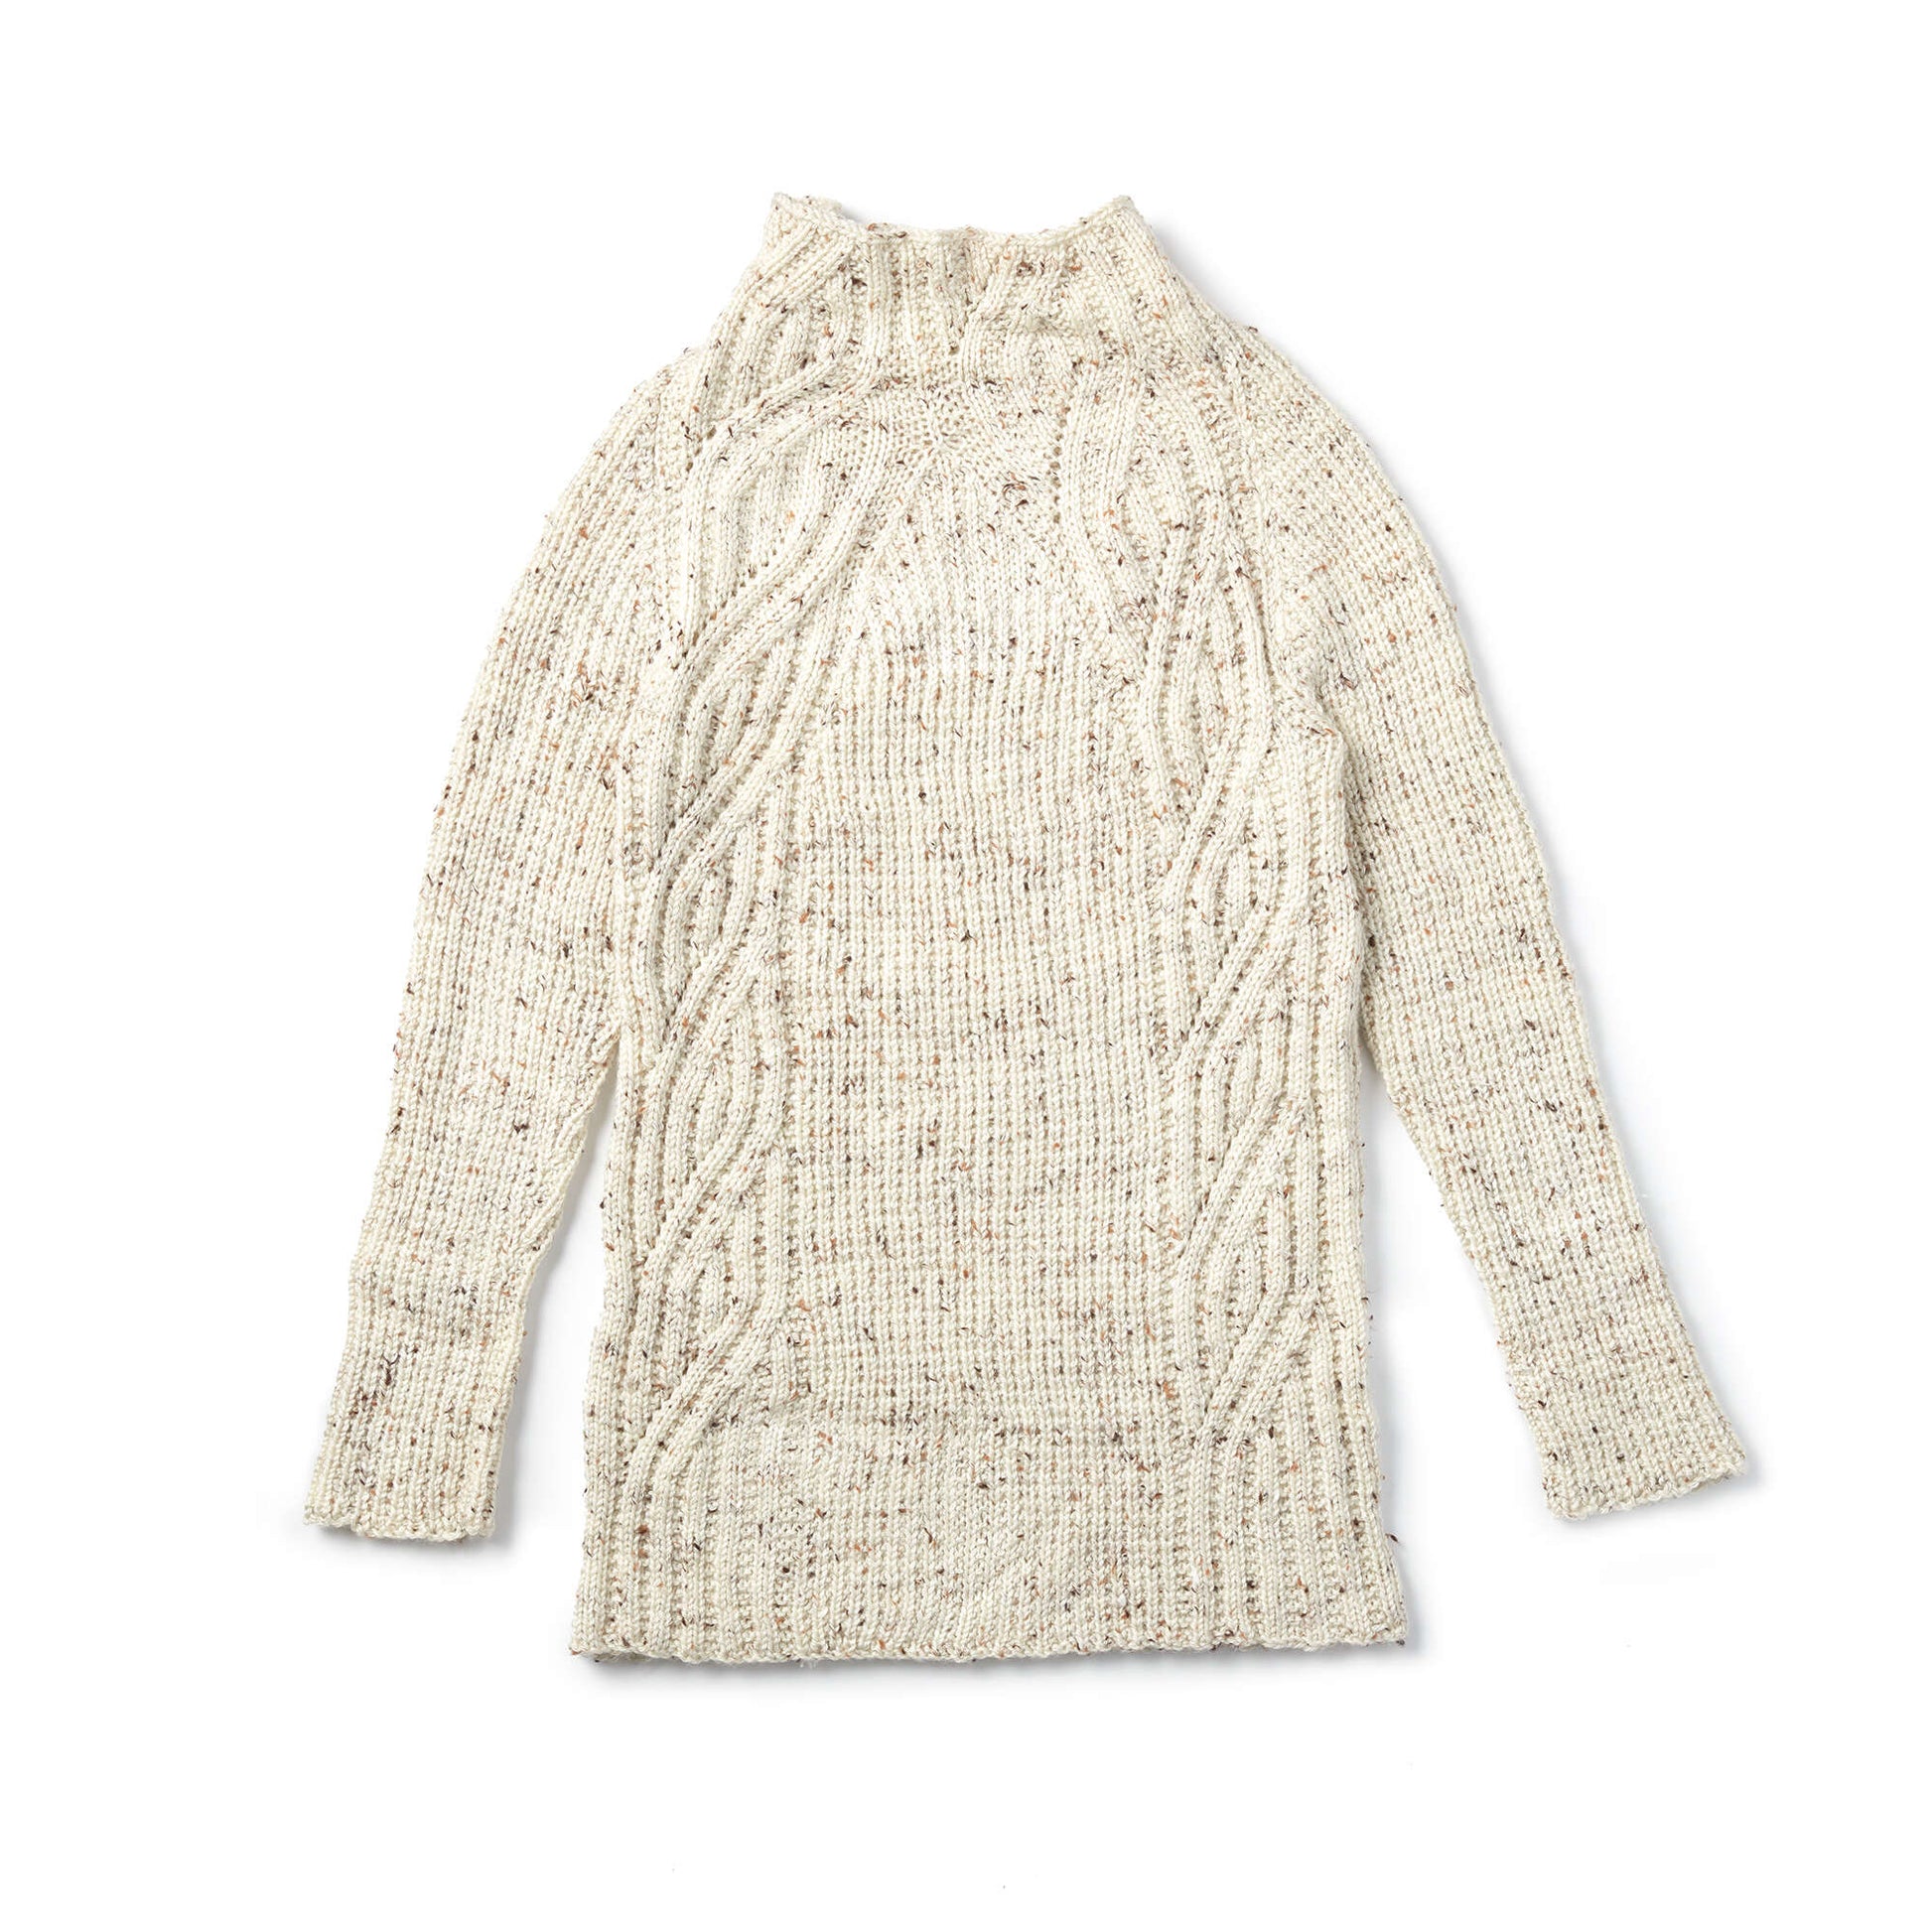 Free Caron Textured Shifts Knit Sweater Pattern